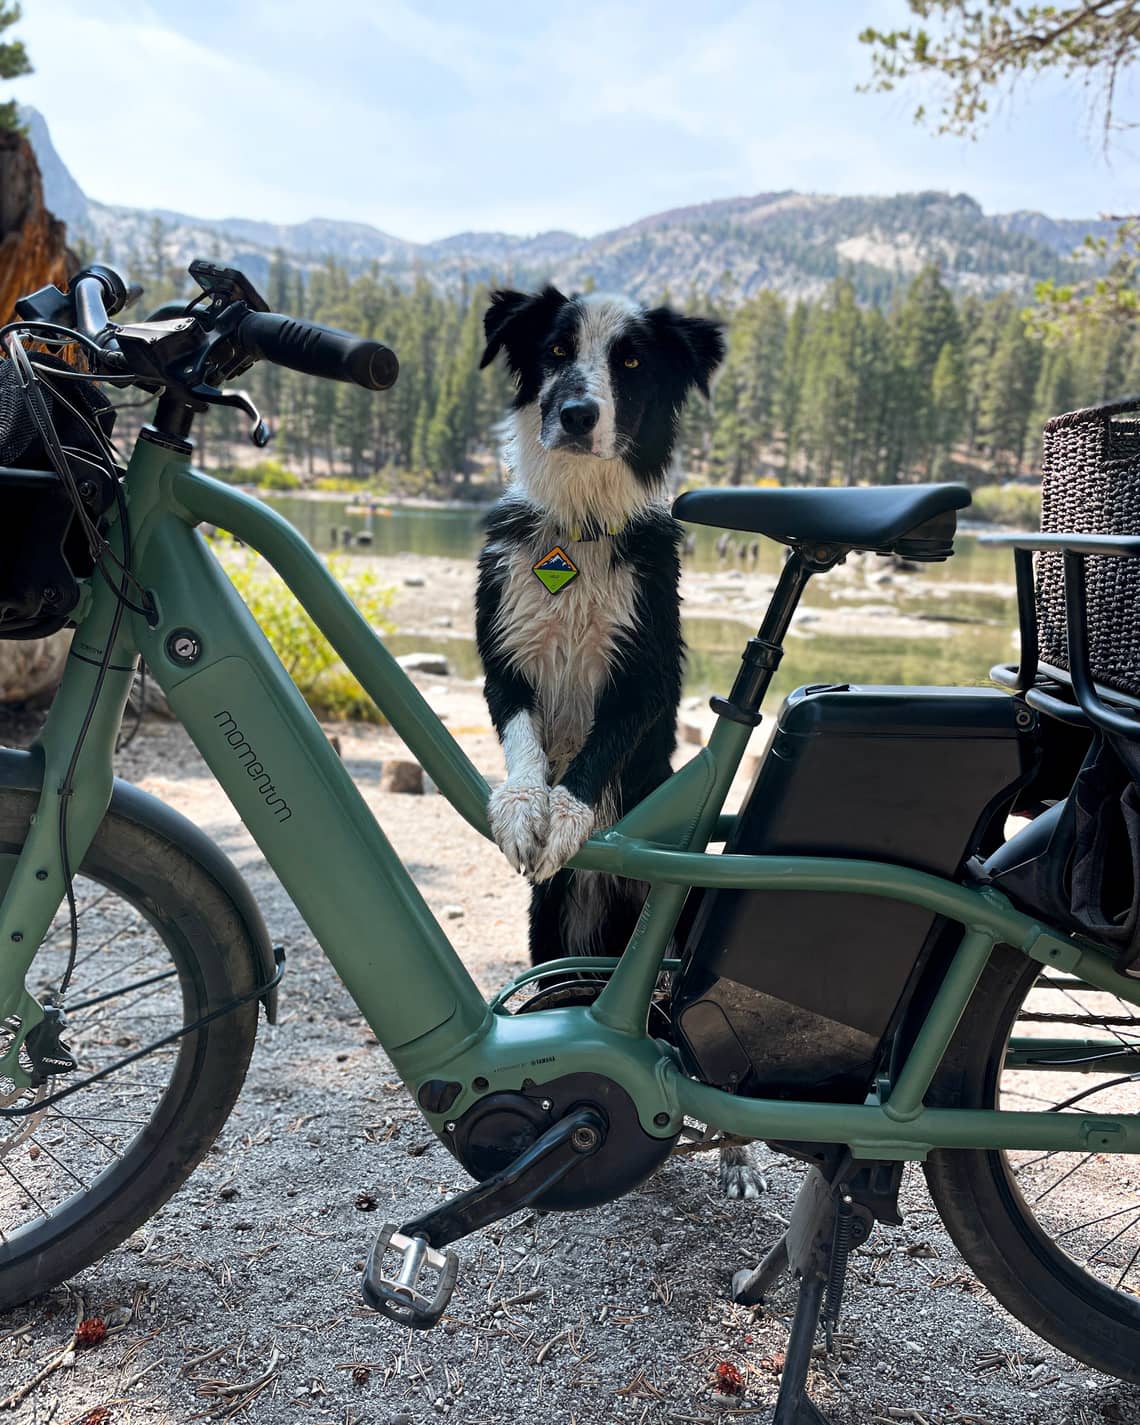 Bike with dog